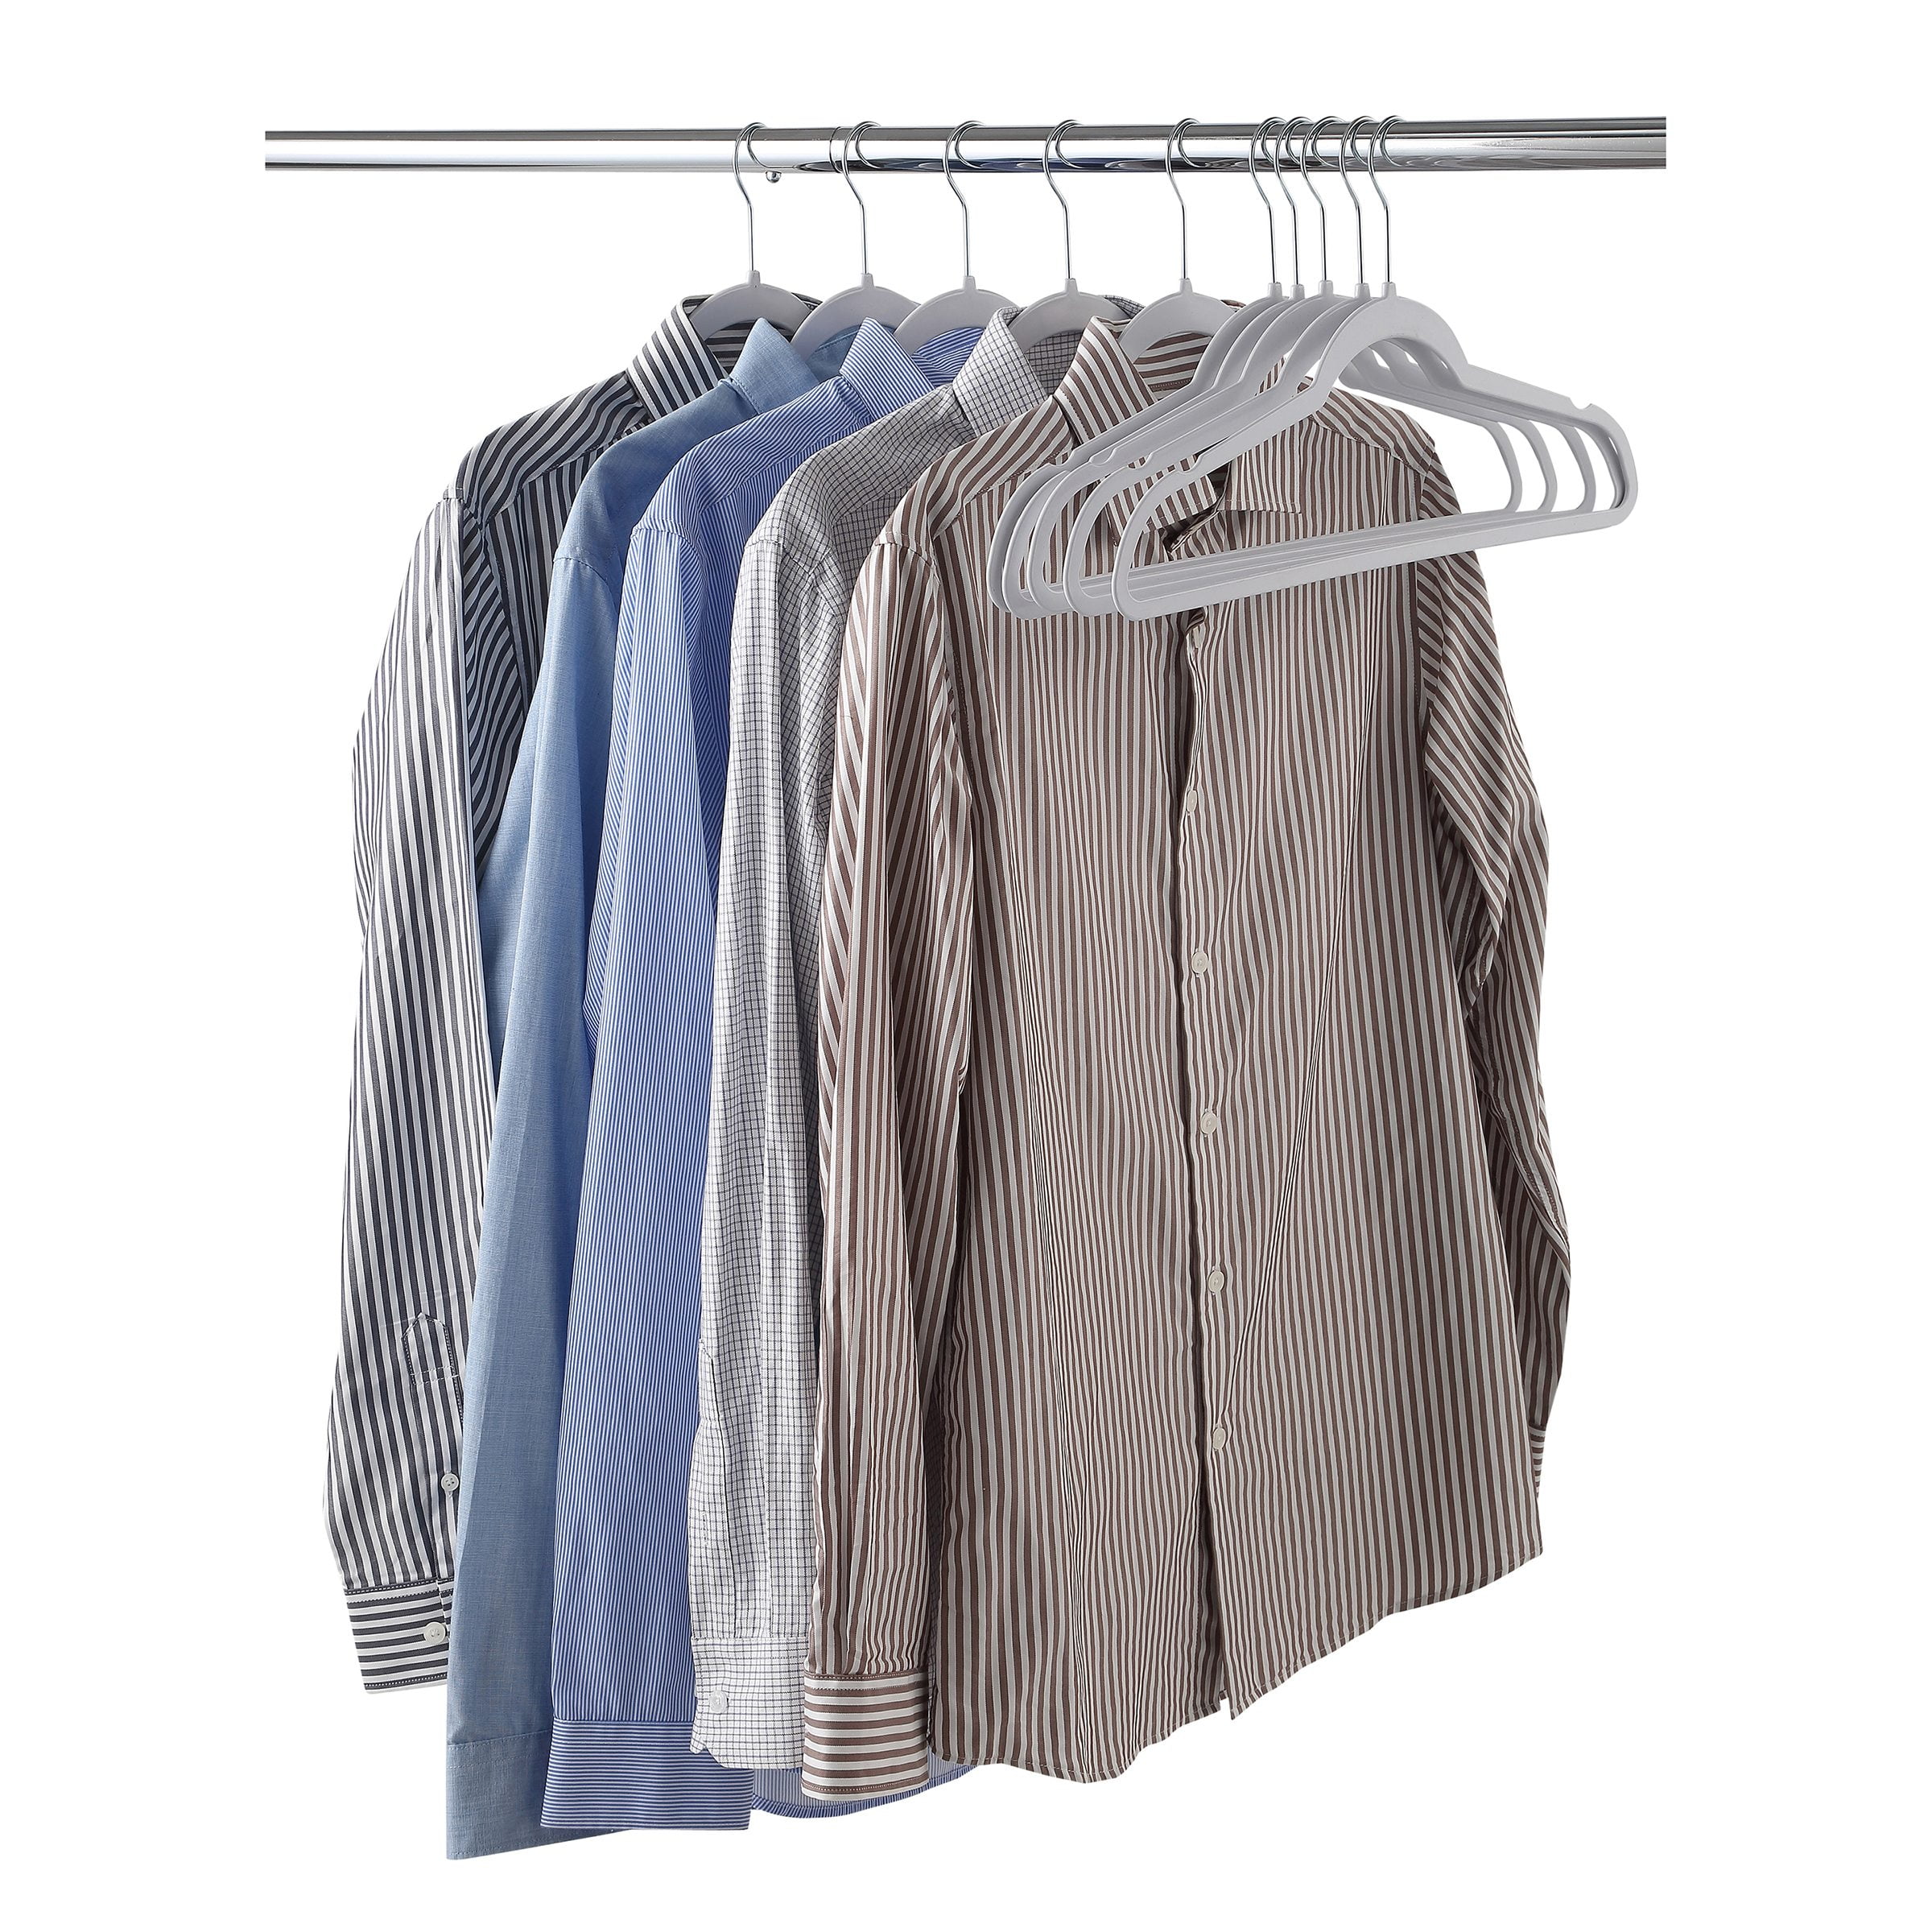 Mainstays Slim Grip Clothing Hangers, 10 Pack, White & Teal